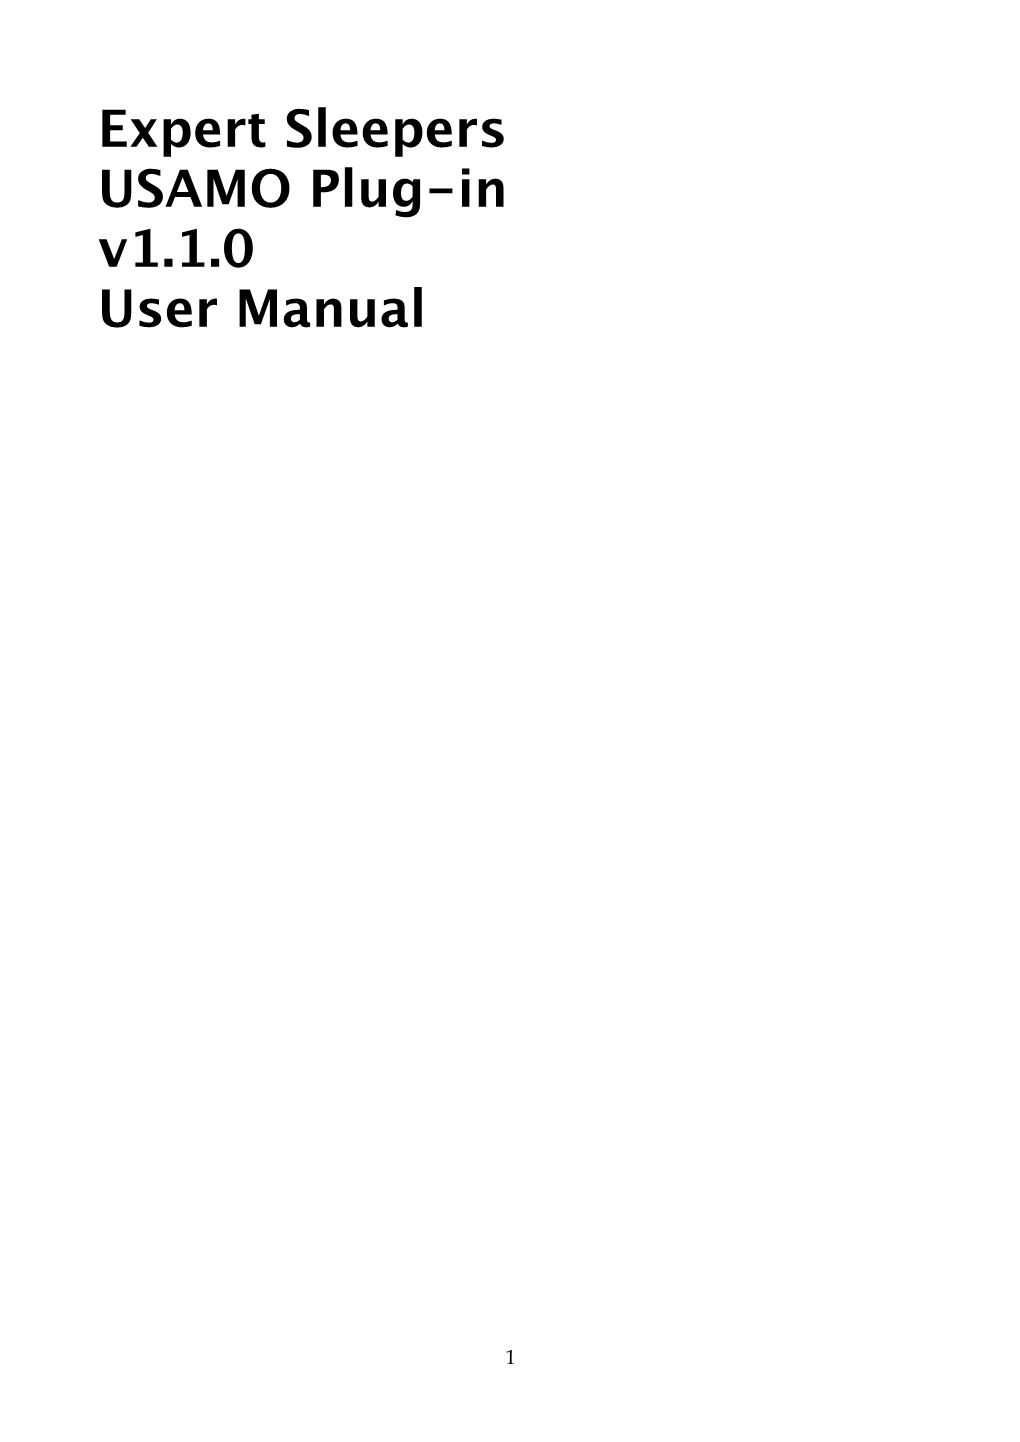 Expert Sleepers USAMO Plug-In V1.1.0 User Manual